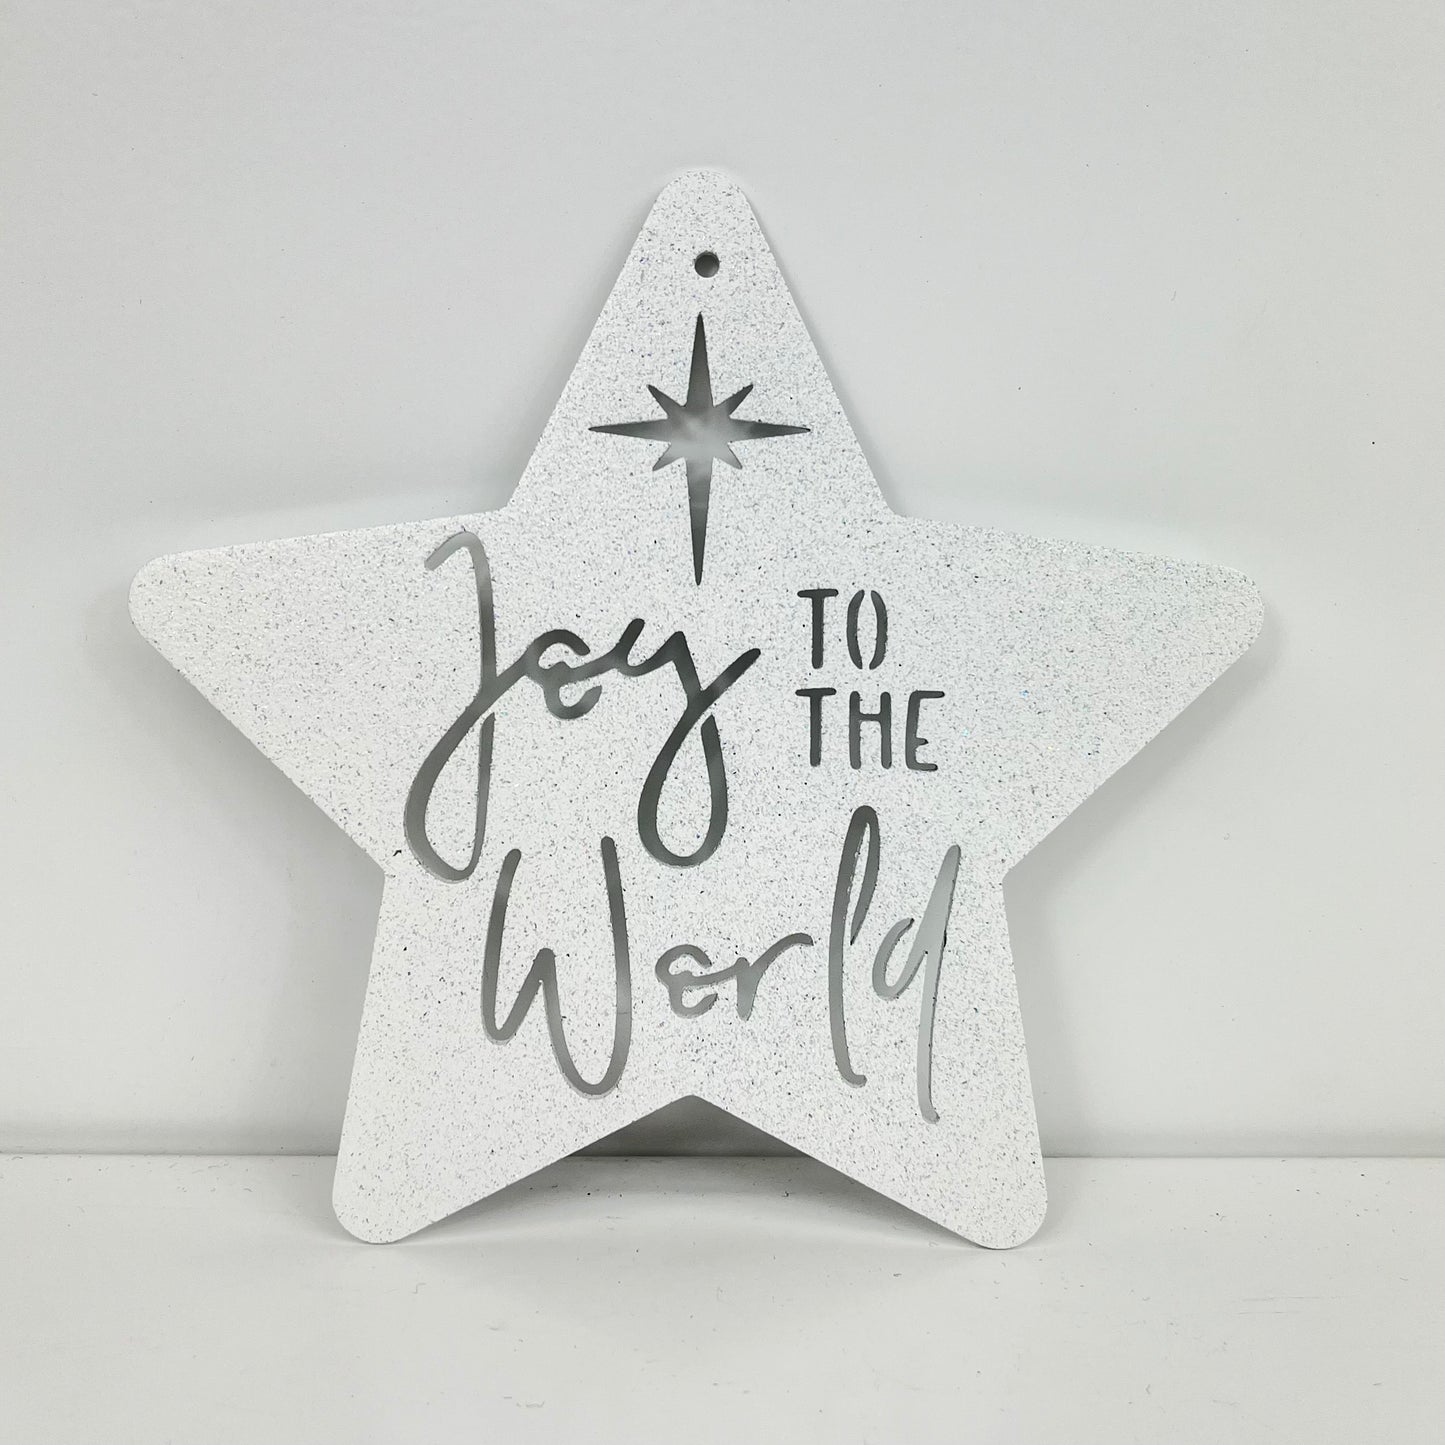 Joy To The World Ornament